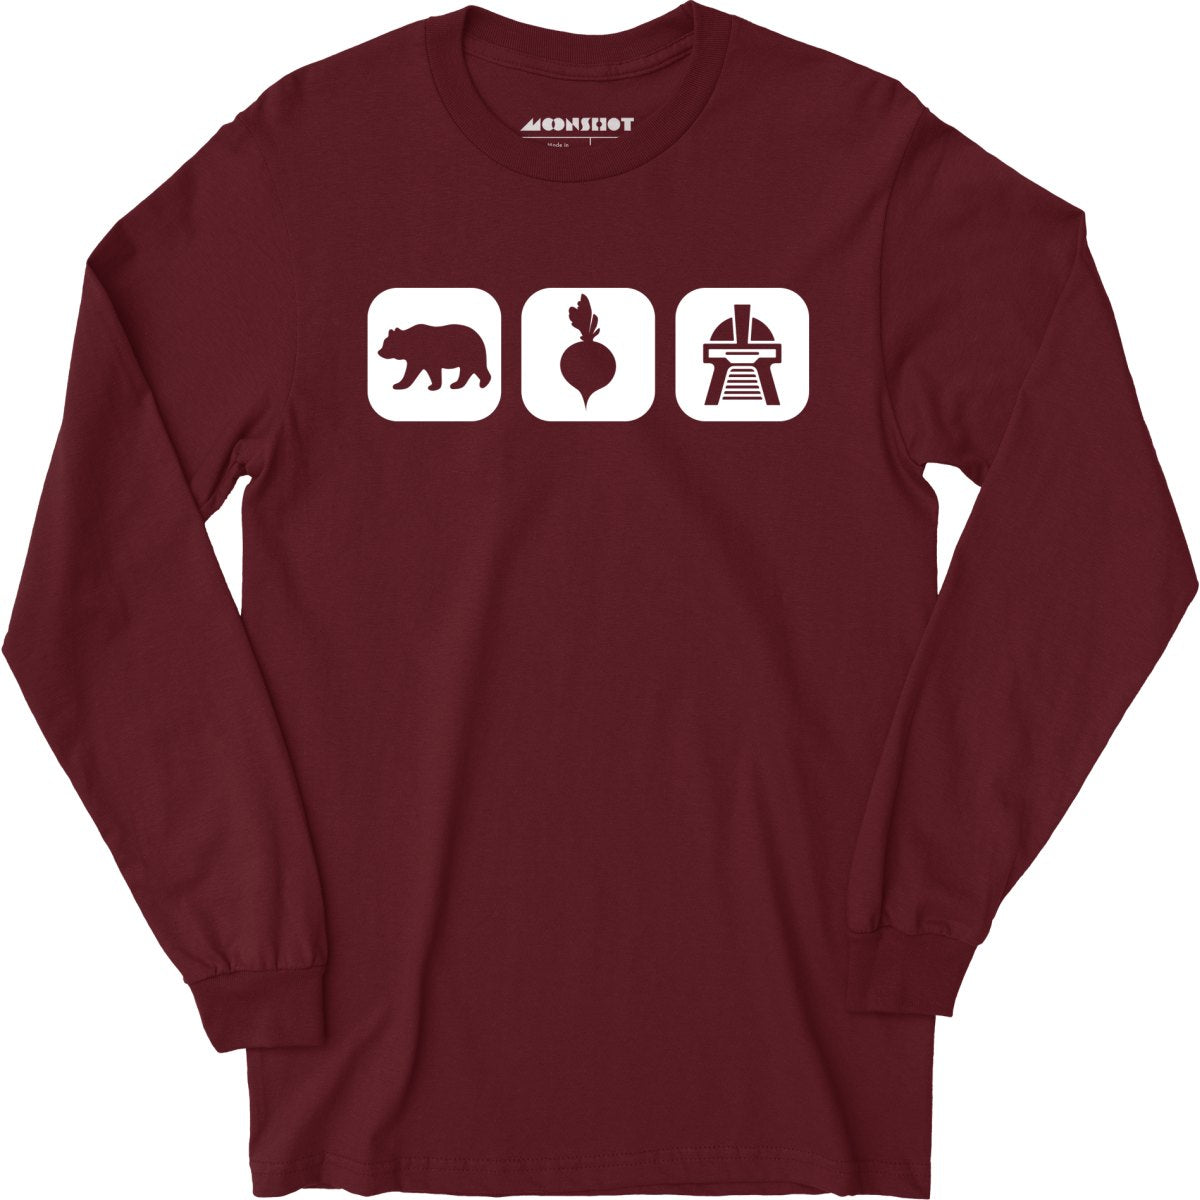 Bears Beets Battlestar Galactica v2 - Long Sleeve T-Shirt